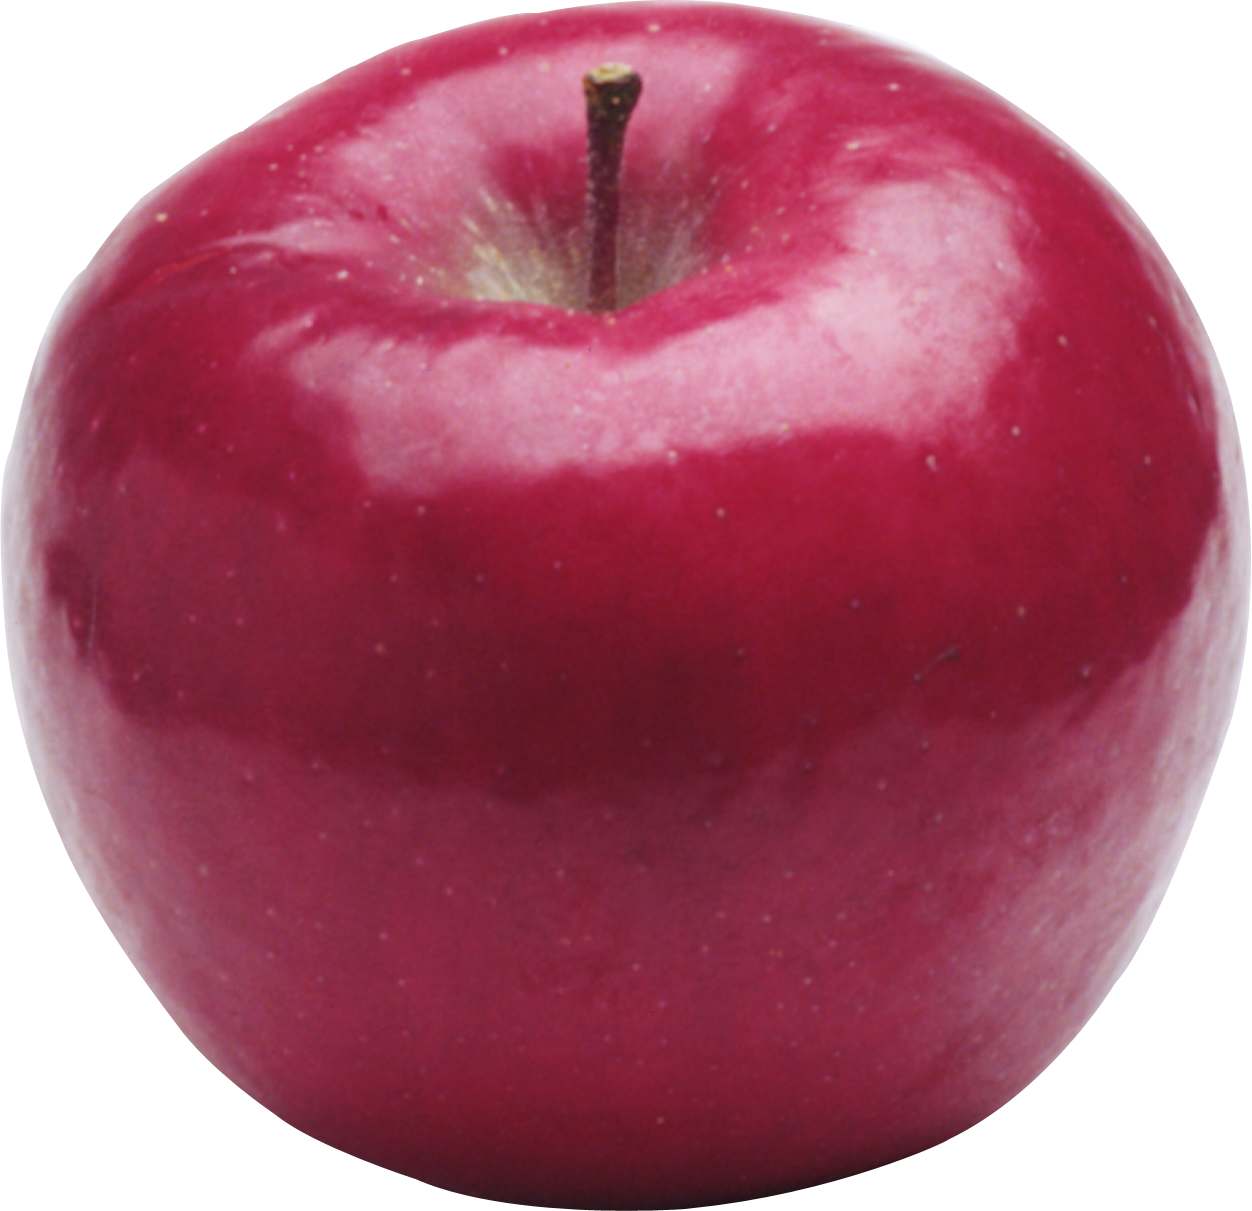 Fresh Red Apple Fruit Image PNG image